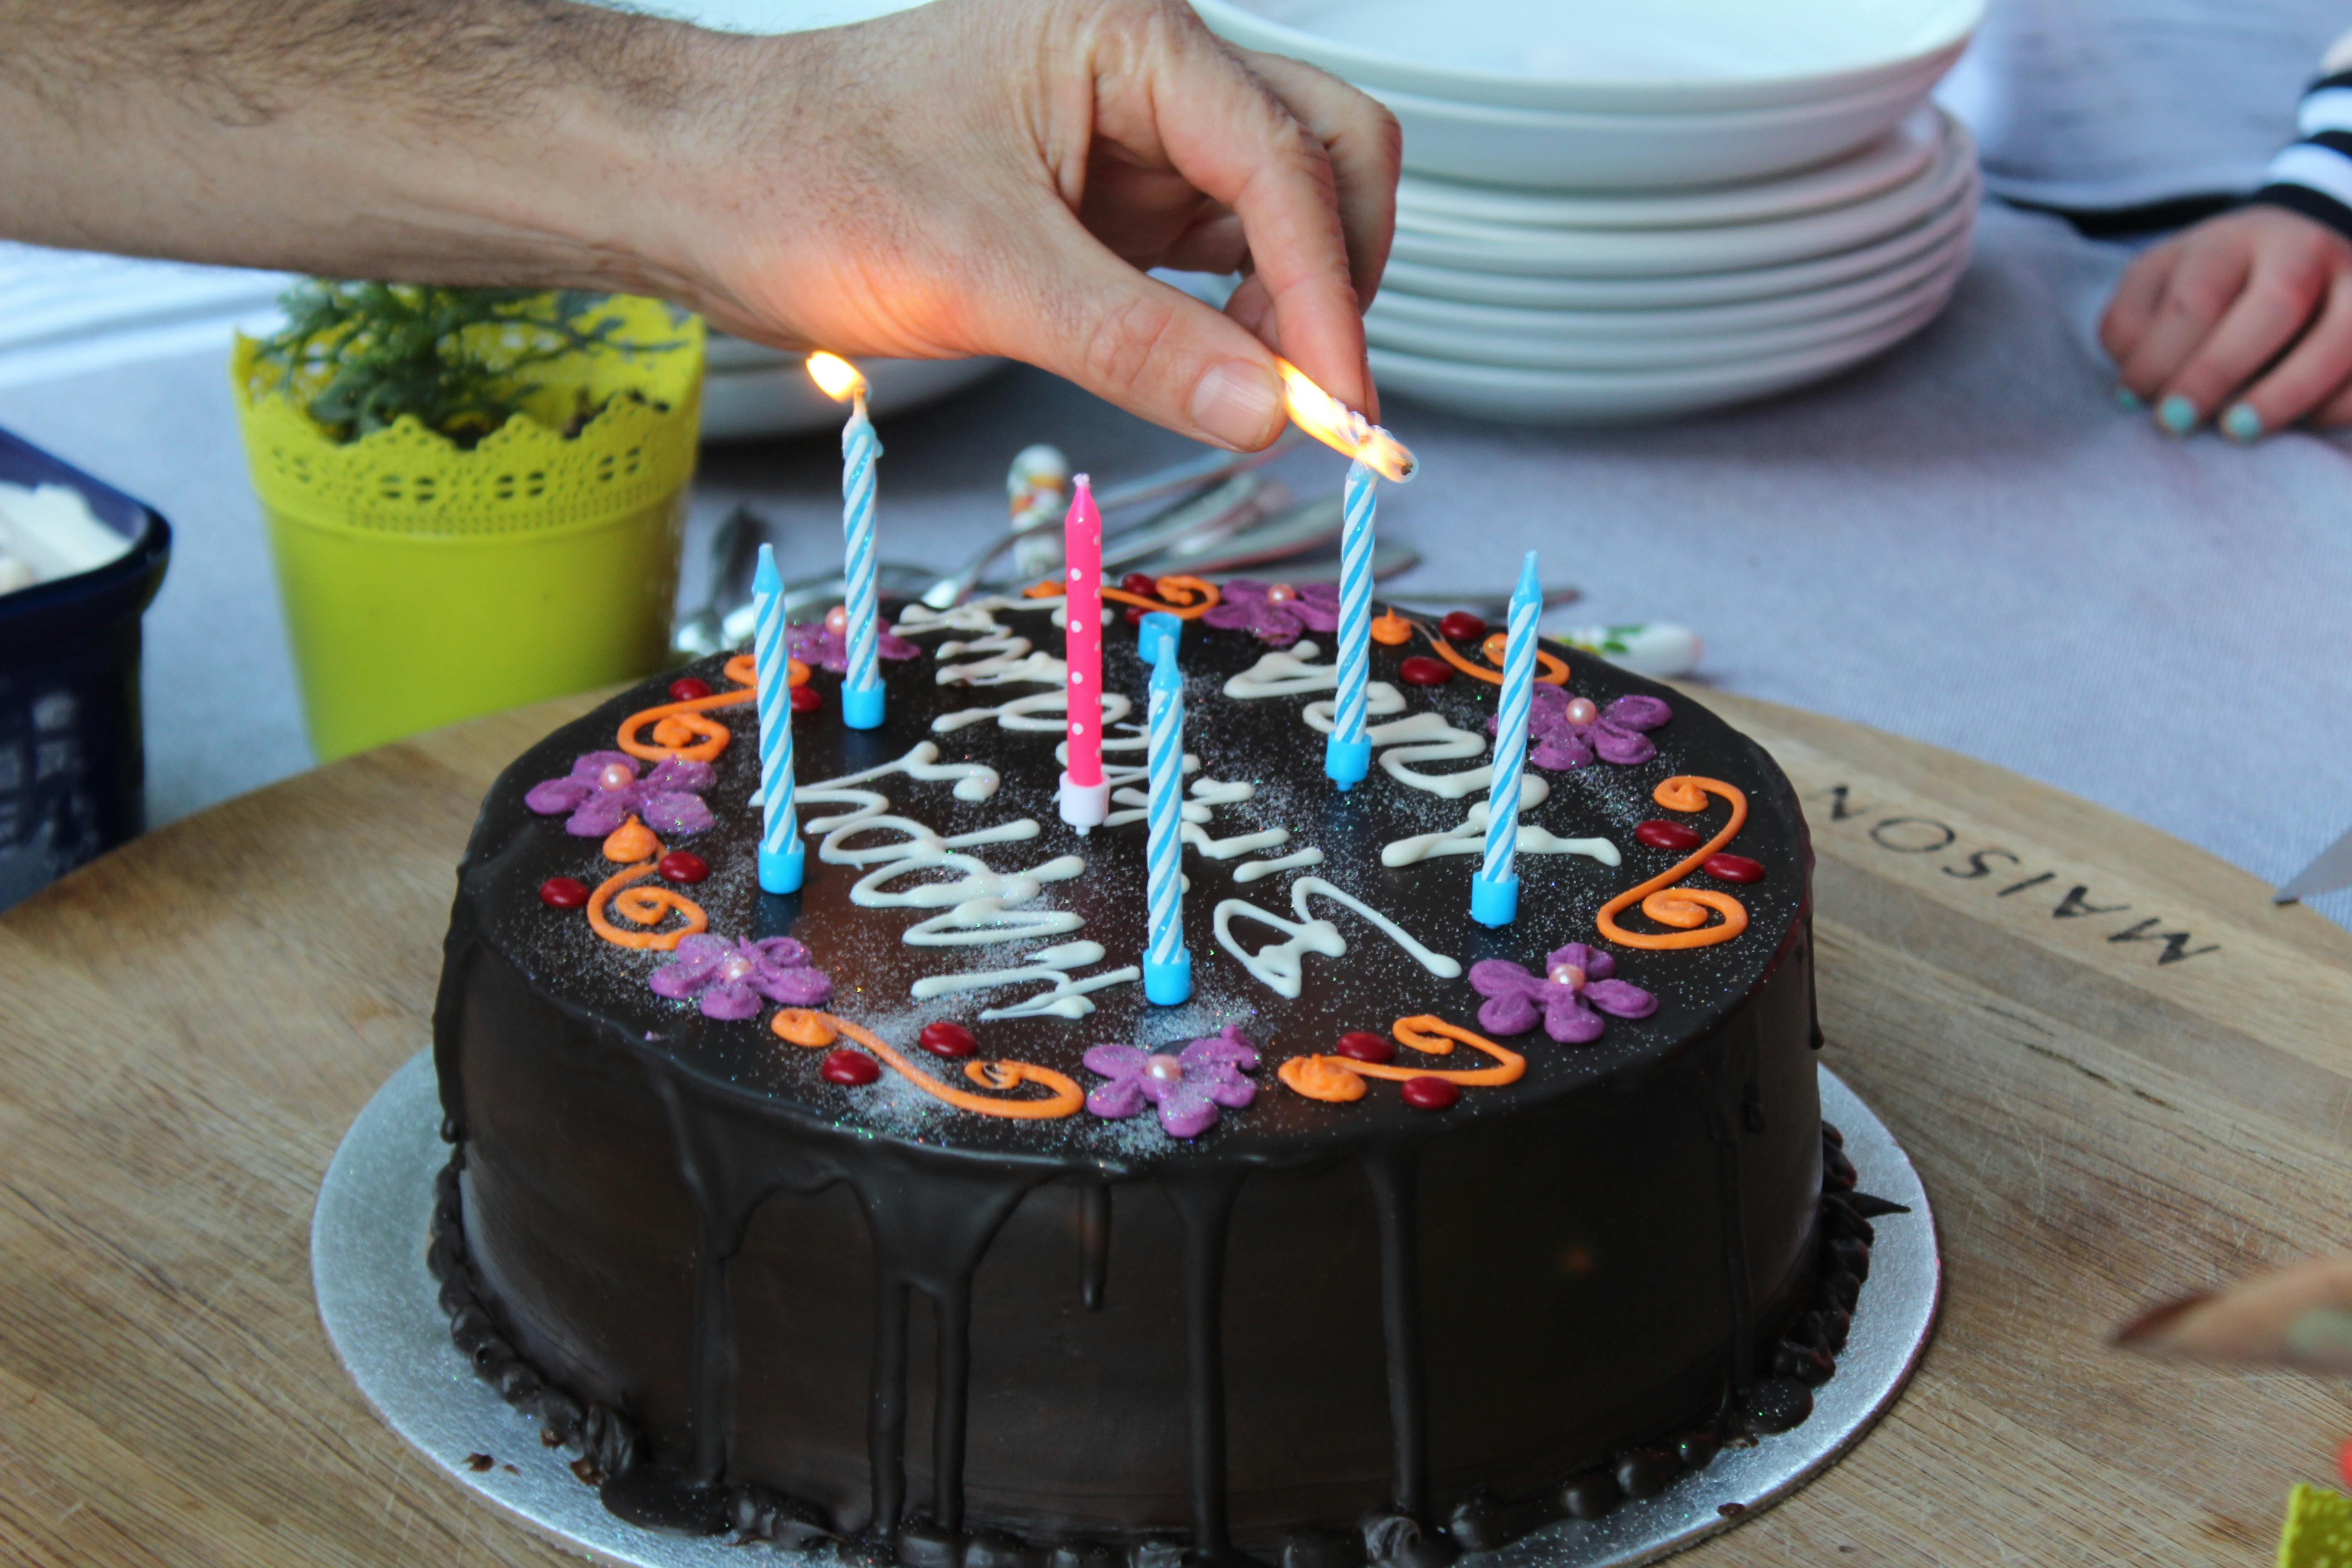 Free stock photo of #birthday #cake #candles #wish